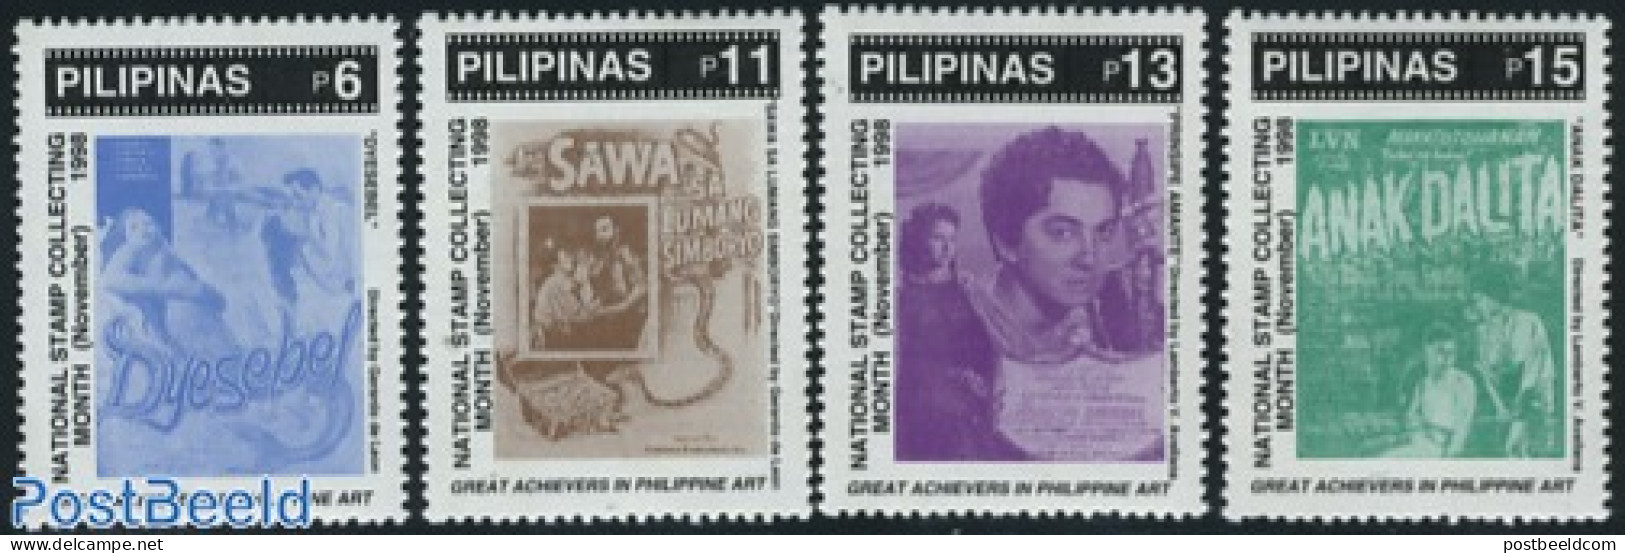 Philippines 1998 Film Posters 4v, Mint NH, Performance Art - Film - Cinéma